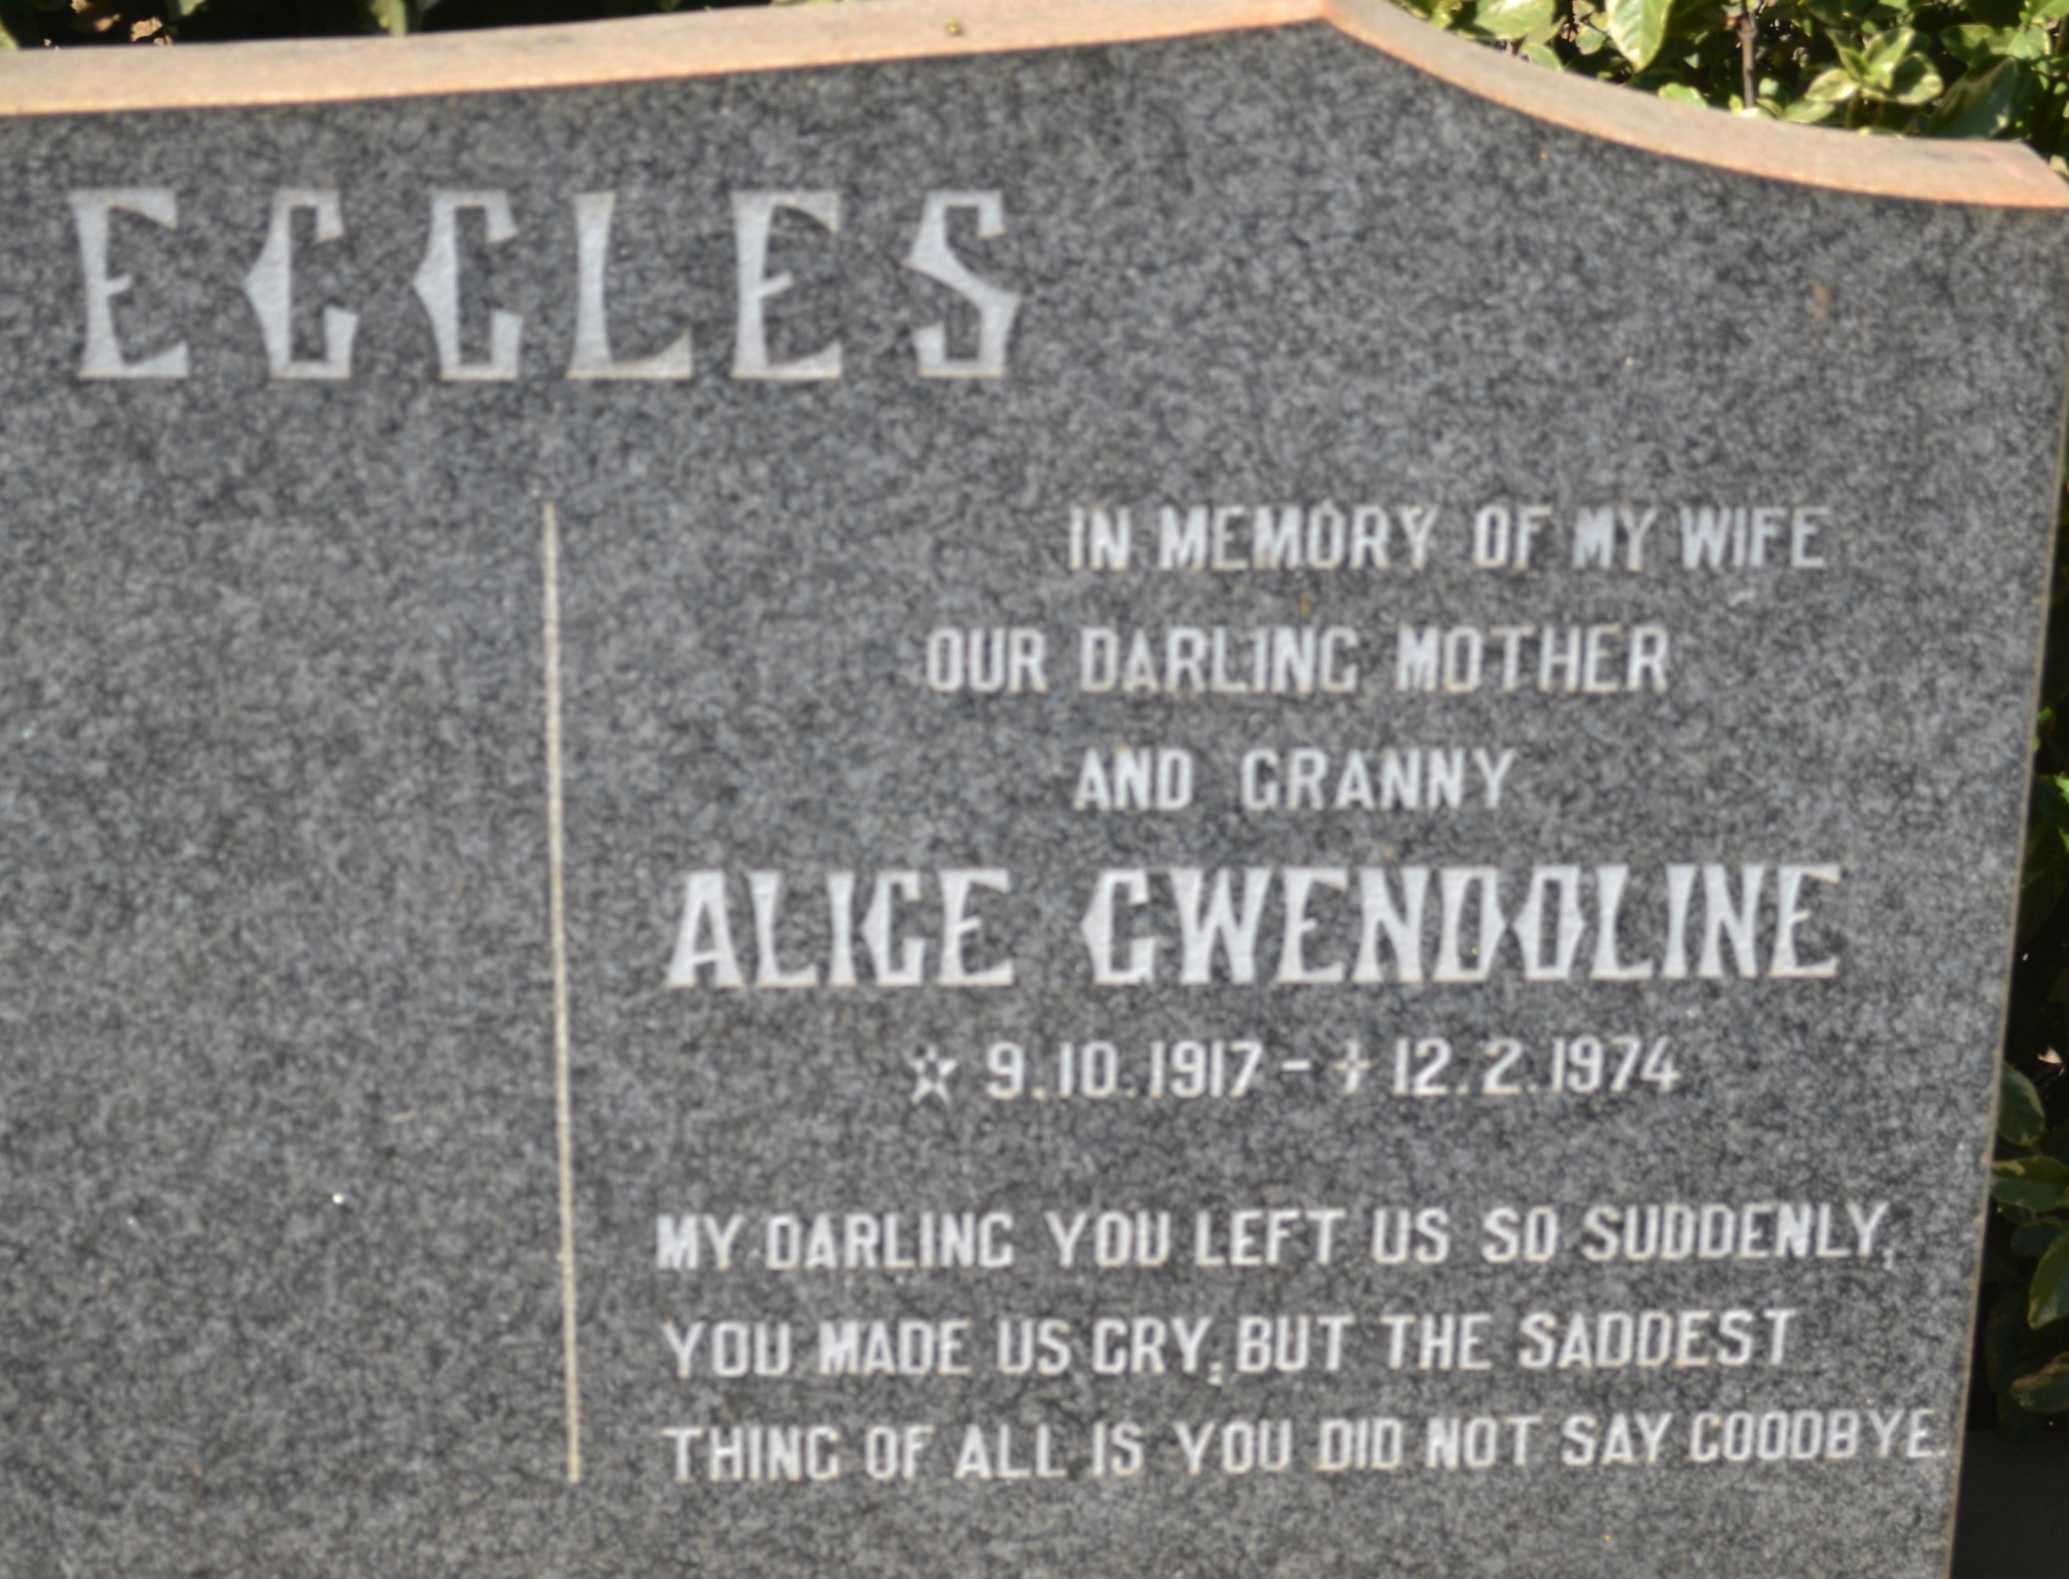 ECCLES Alice Gwendoline 1917-1974